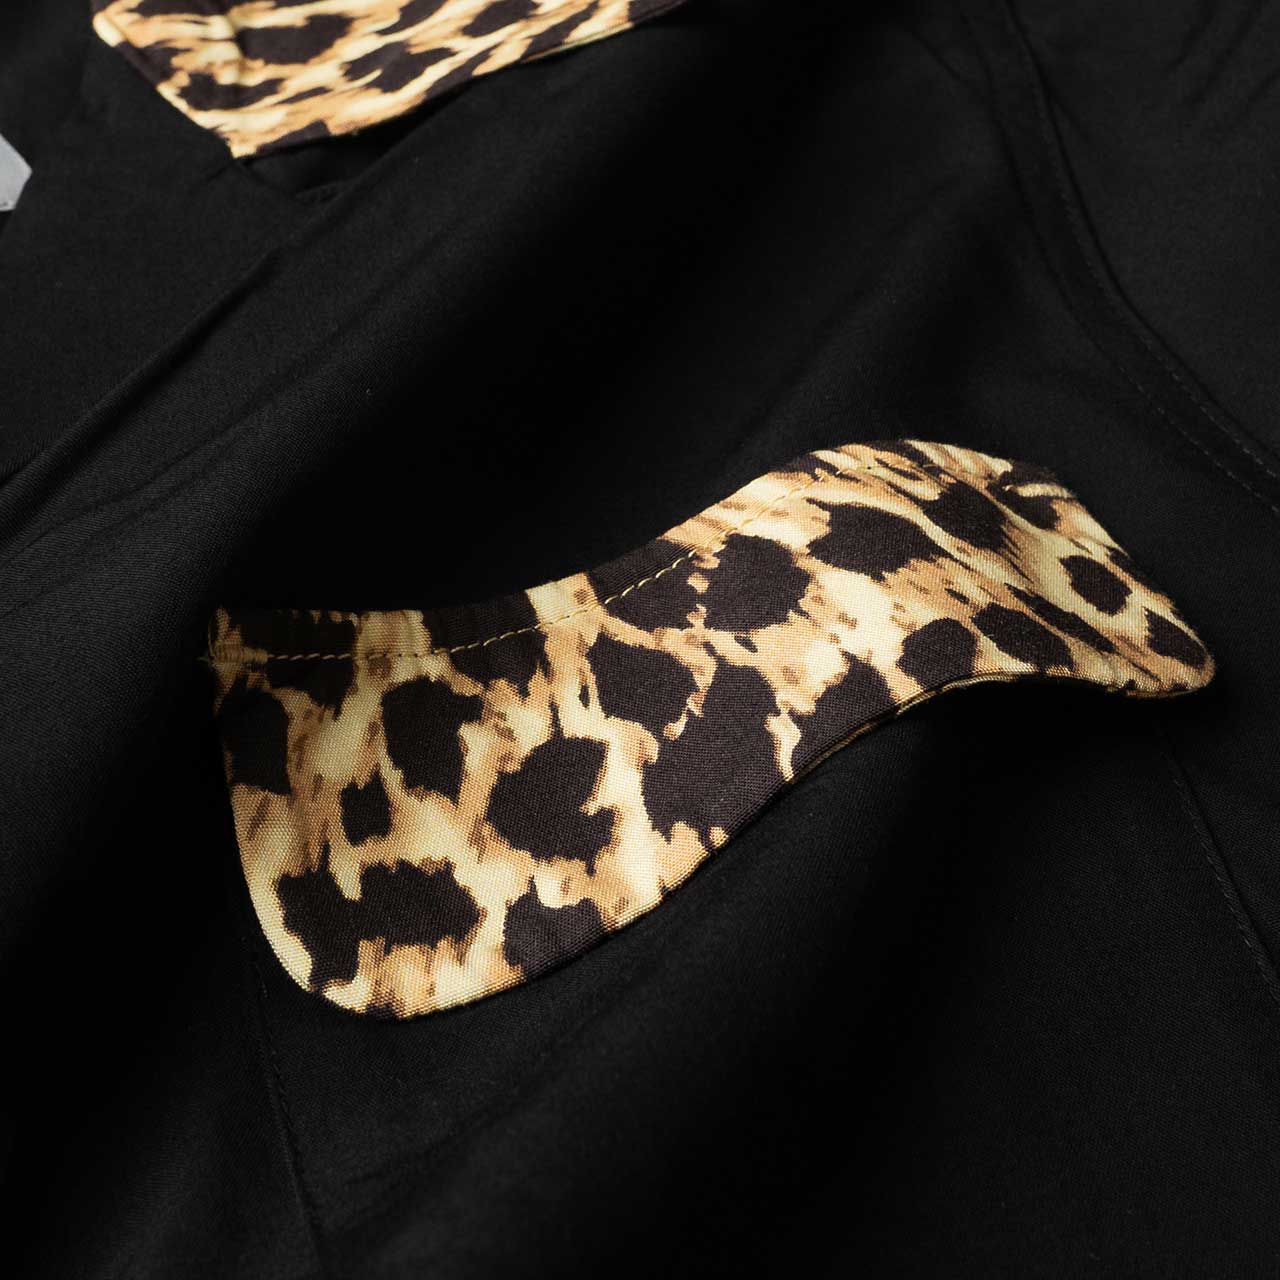 carhartt wip x wacko maria 50's shirt (black / leopard print) - i028240.0d6.90.03 - a.plus - Image - 4